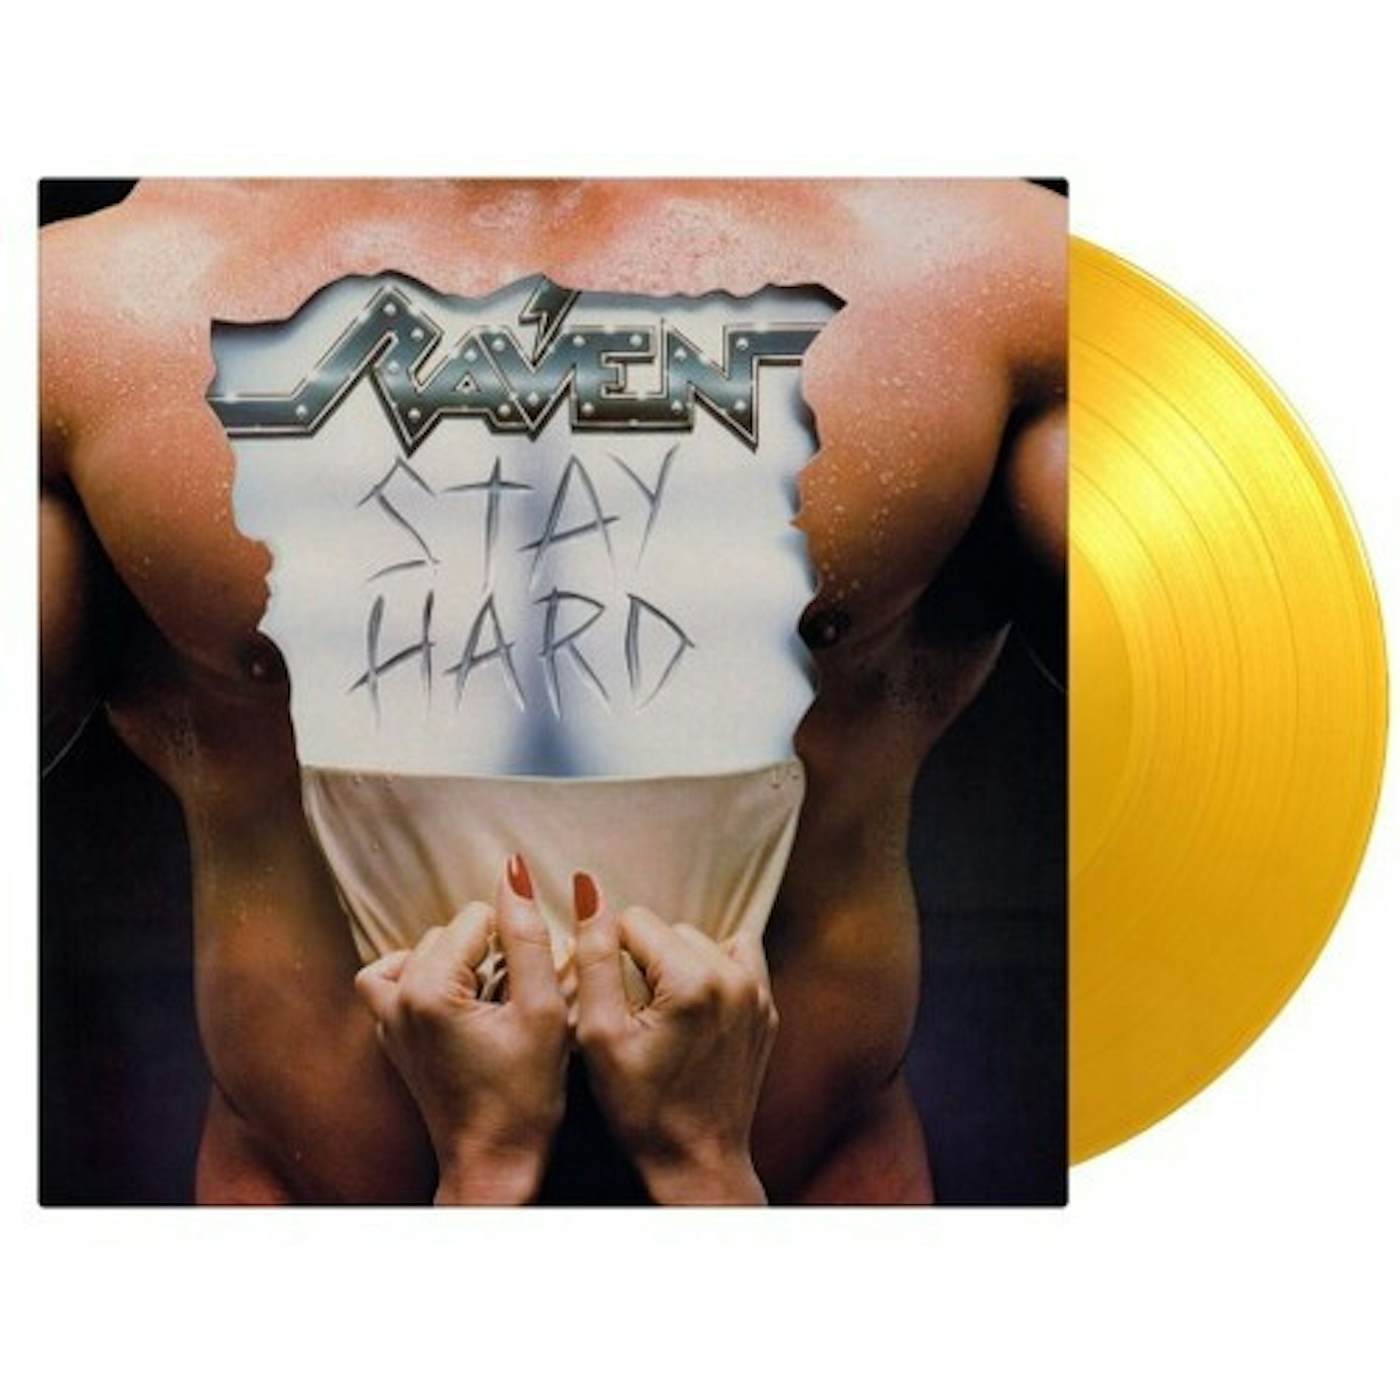 Raven Stay Hard Vinyl Record